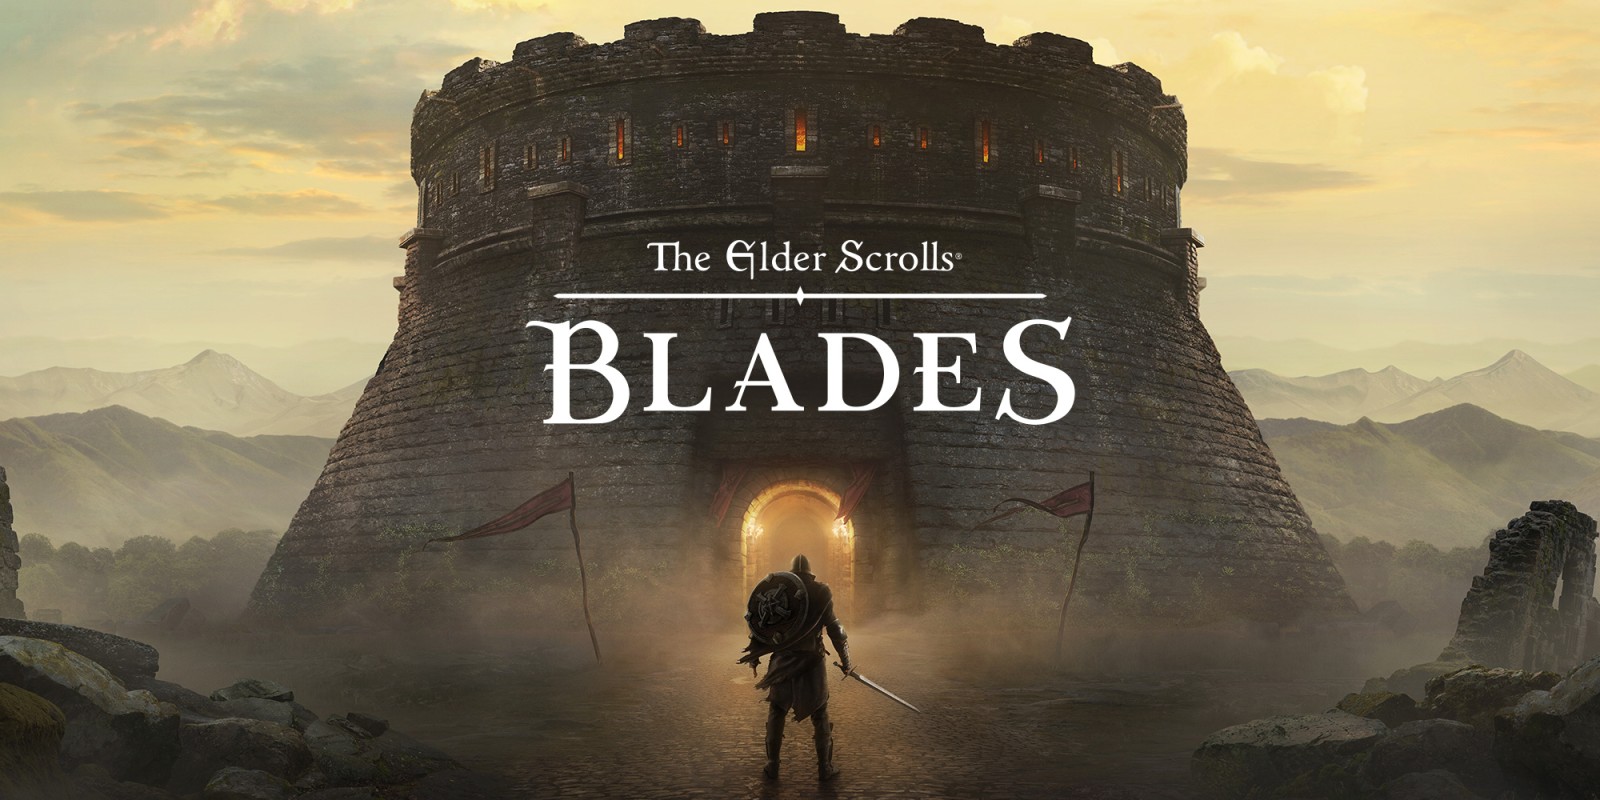 The Elder Scrolls: Blades
open world android games